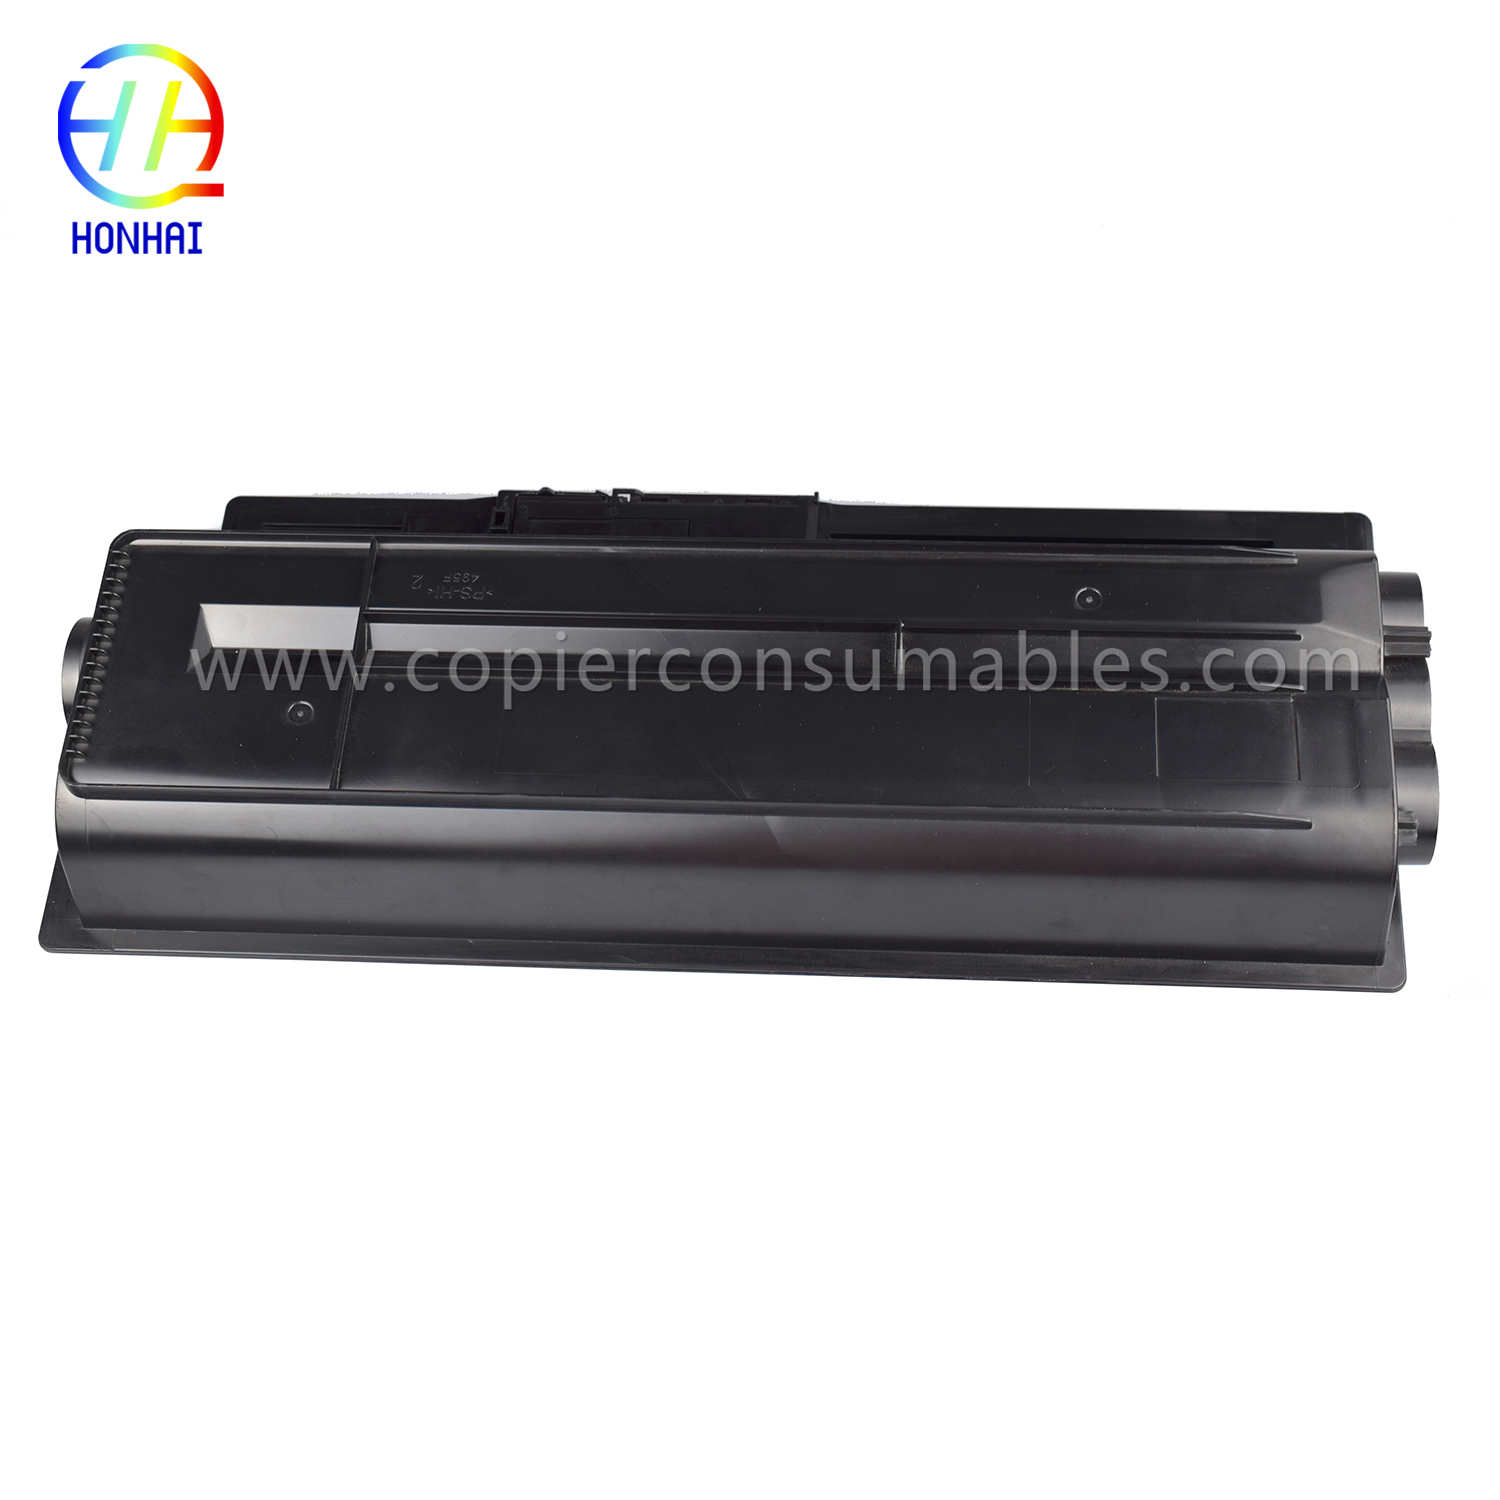 Toner Cartridge  for Kyocera FS-6025 FS-6025MFP FS-6530 FS-6030MFP TK-475